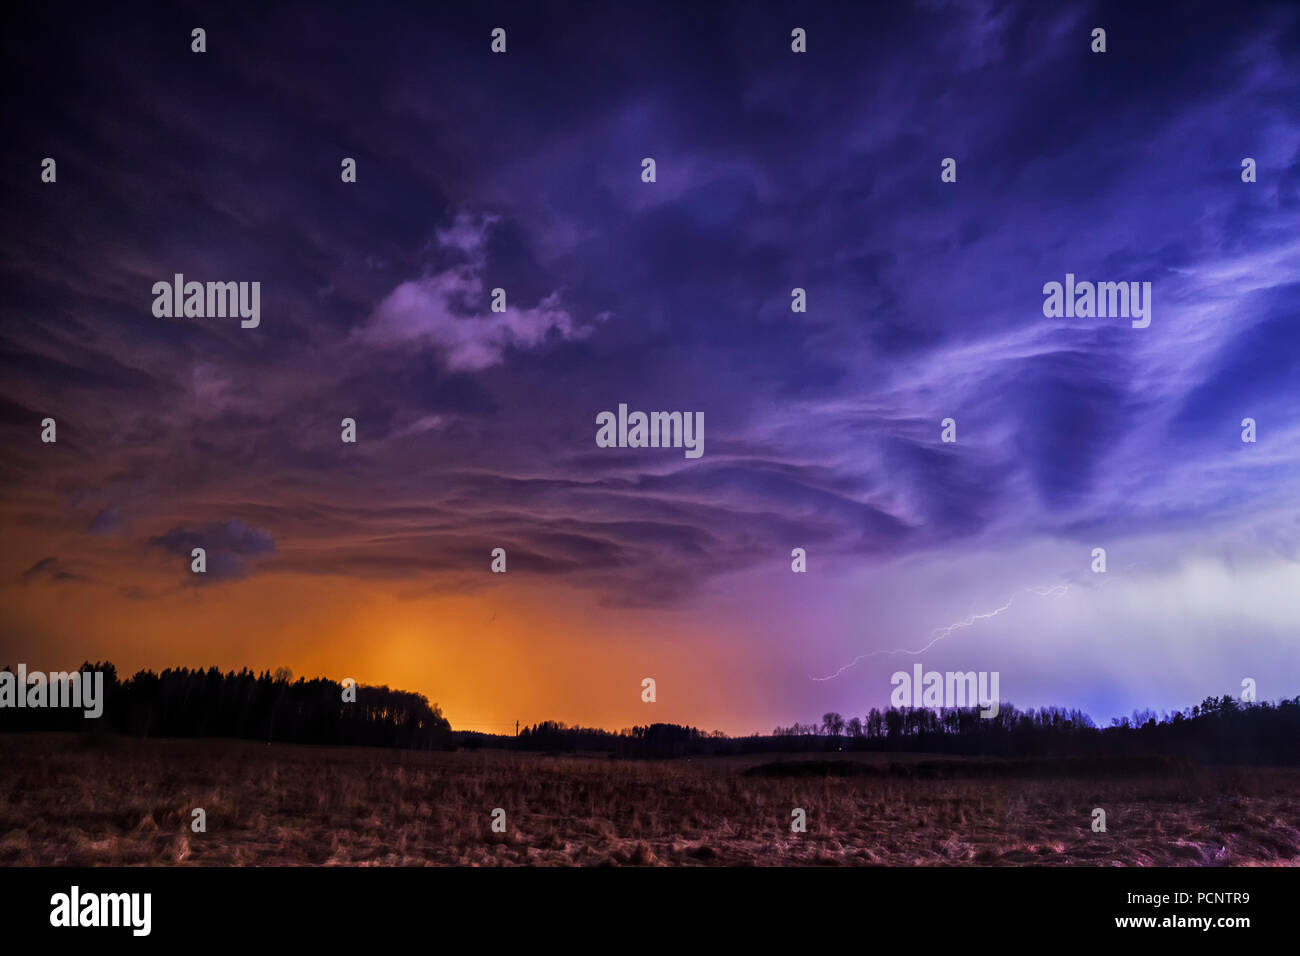 Espectacular paisaje oscuro cielo tormentoso encima de los campos. Foto de stock